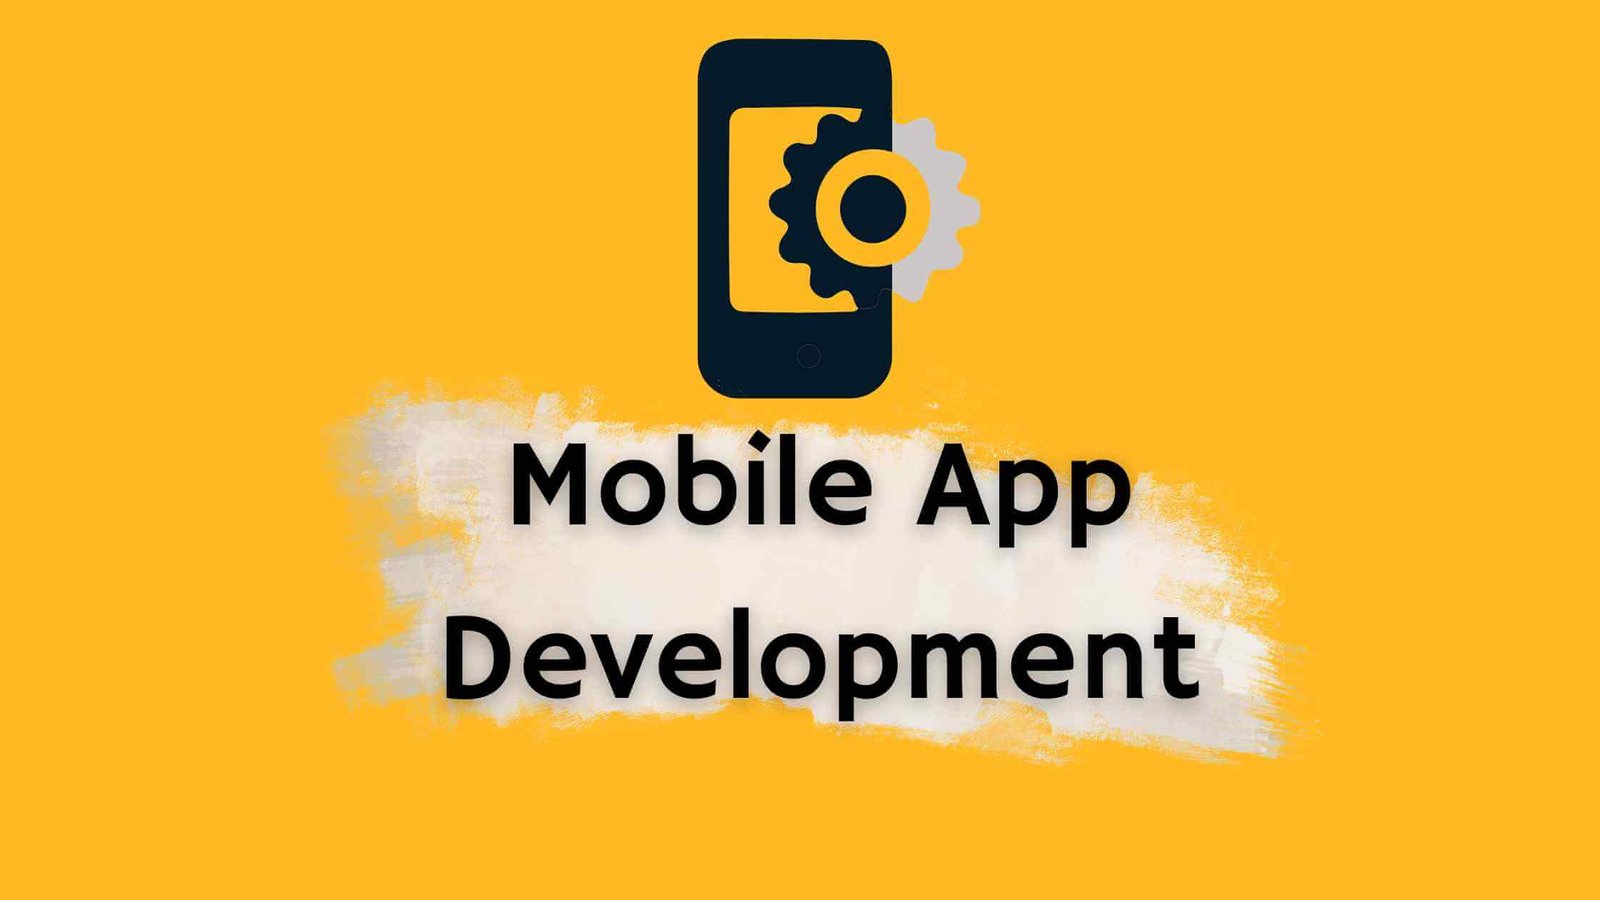 Mobile App Development platforms